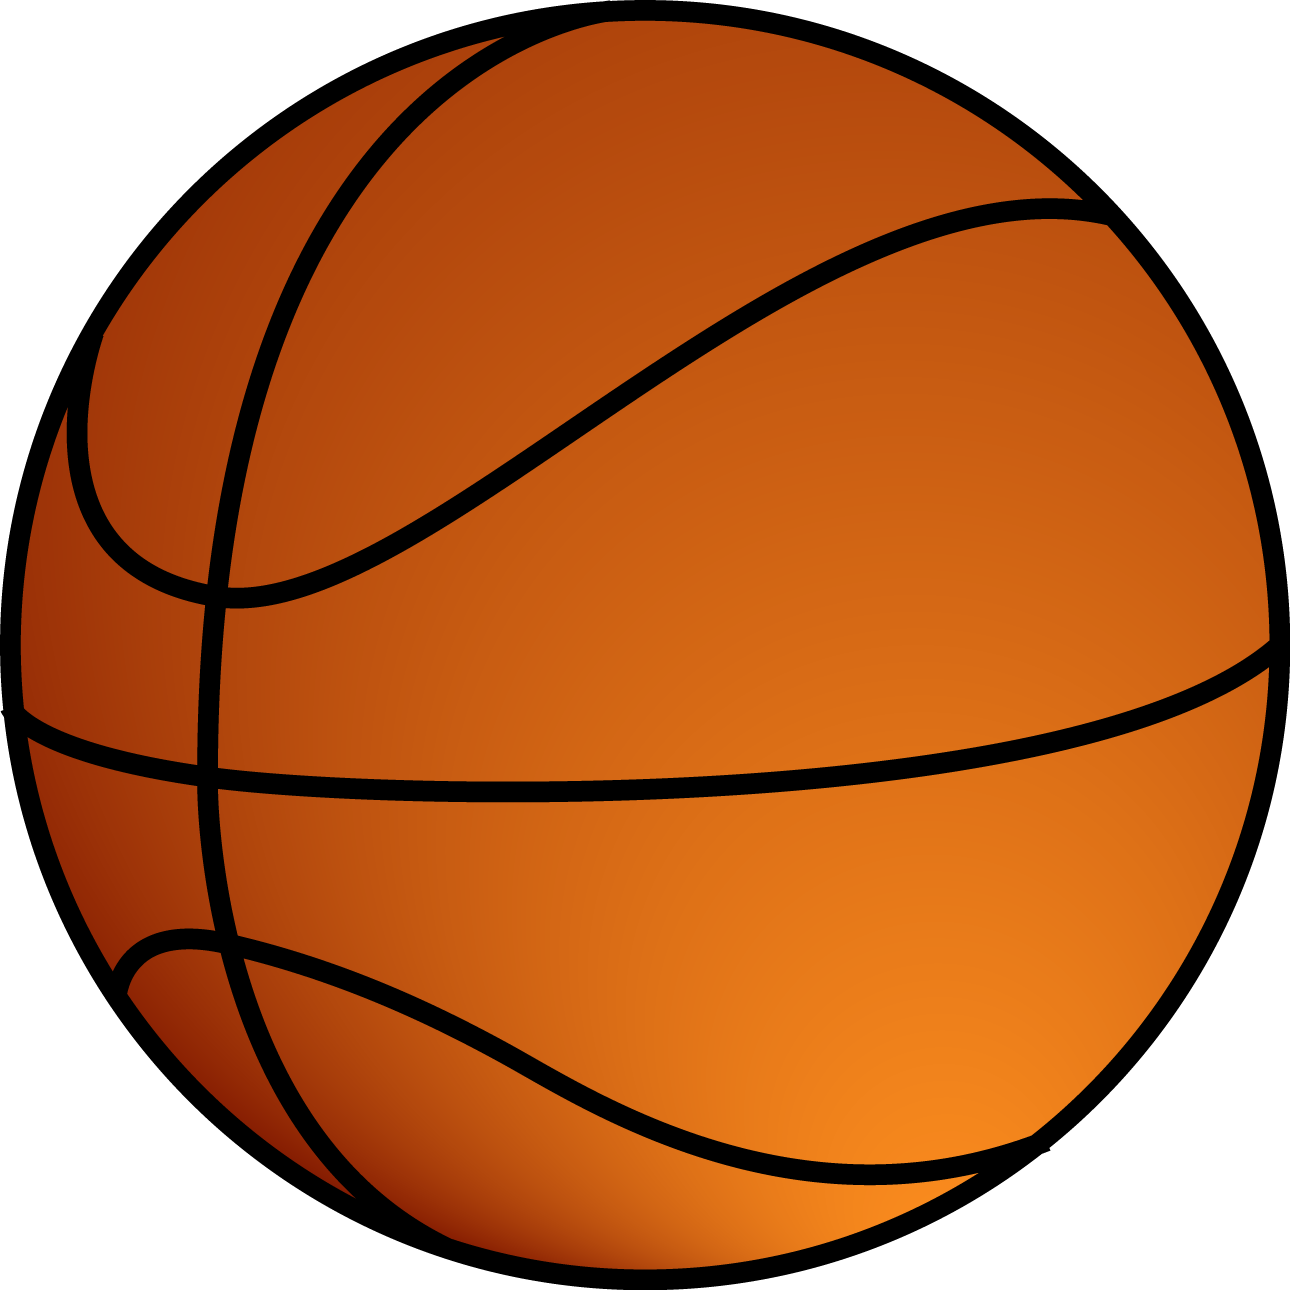 Basketball Team PNG Image Background